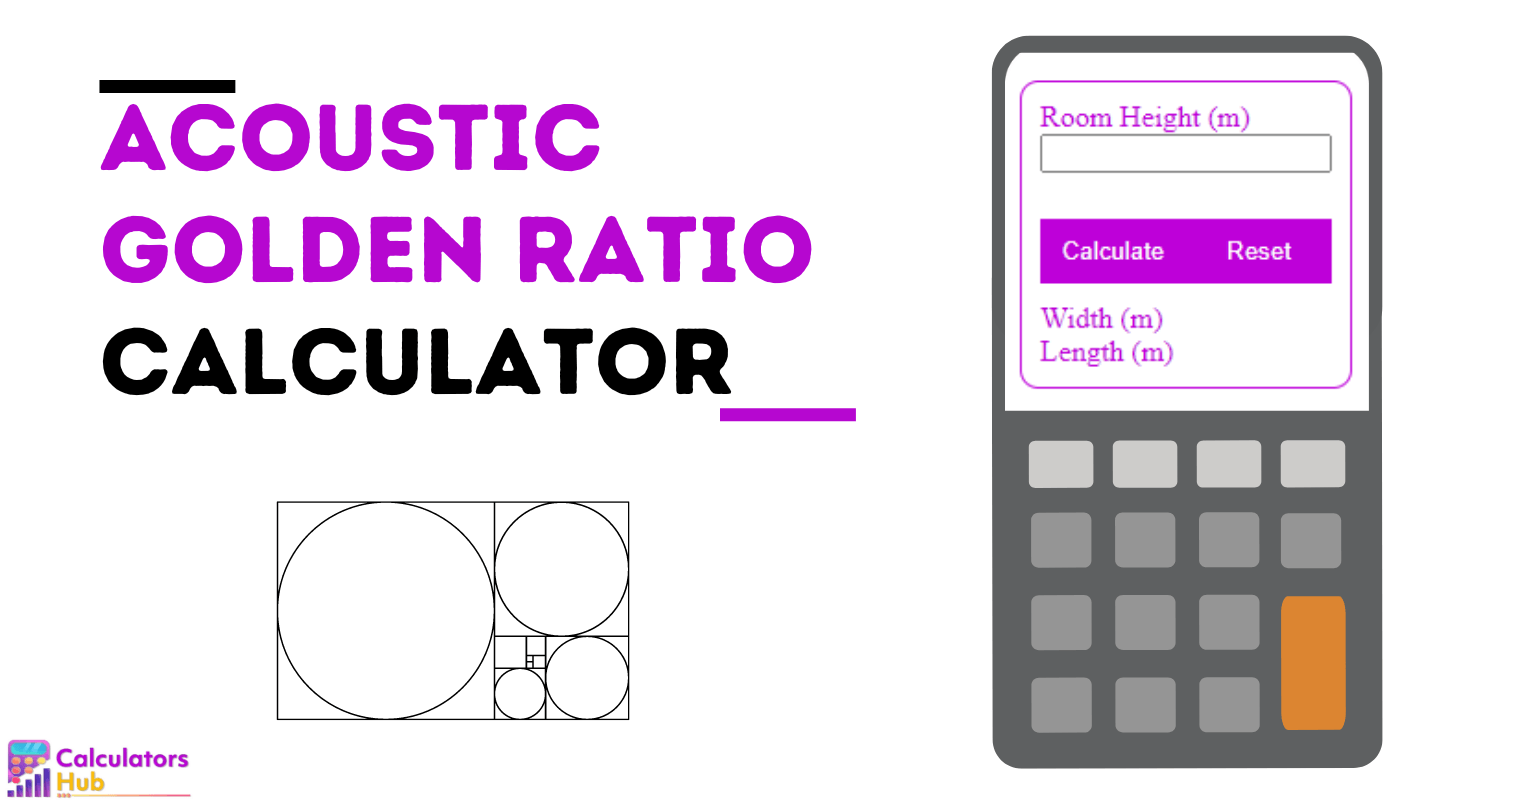 Acoustic Golden Ratio Calculator